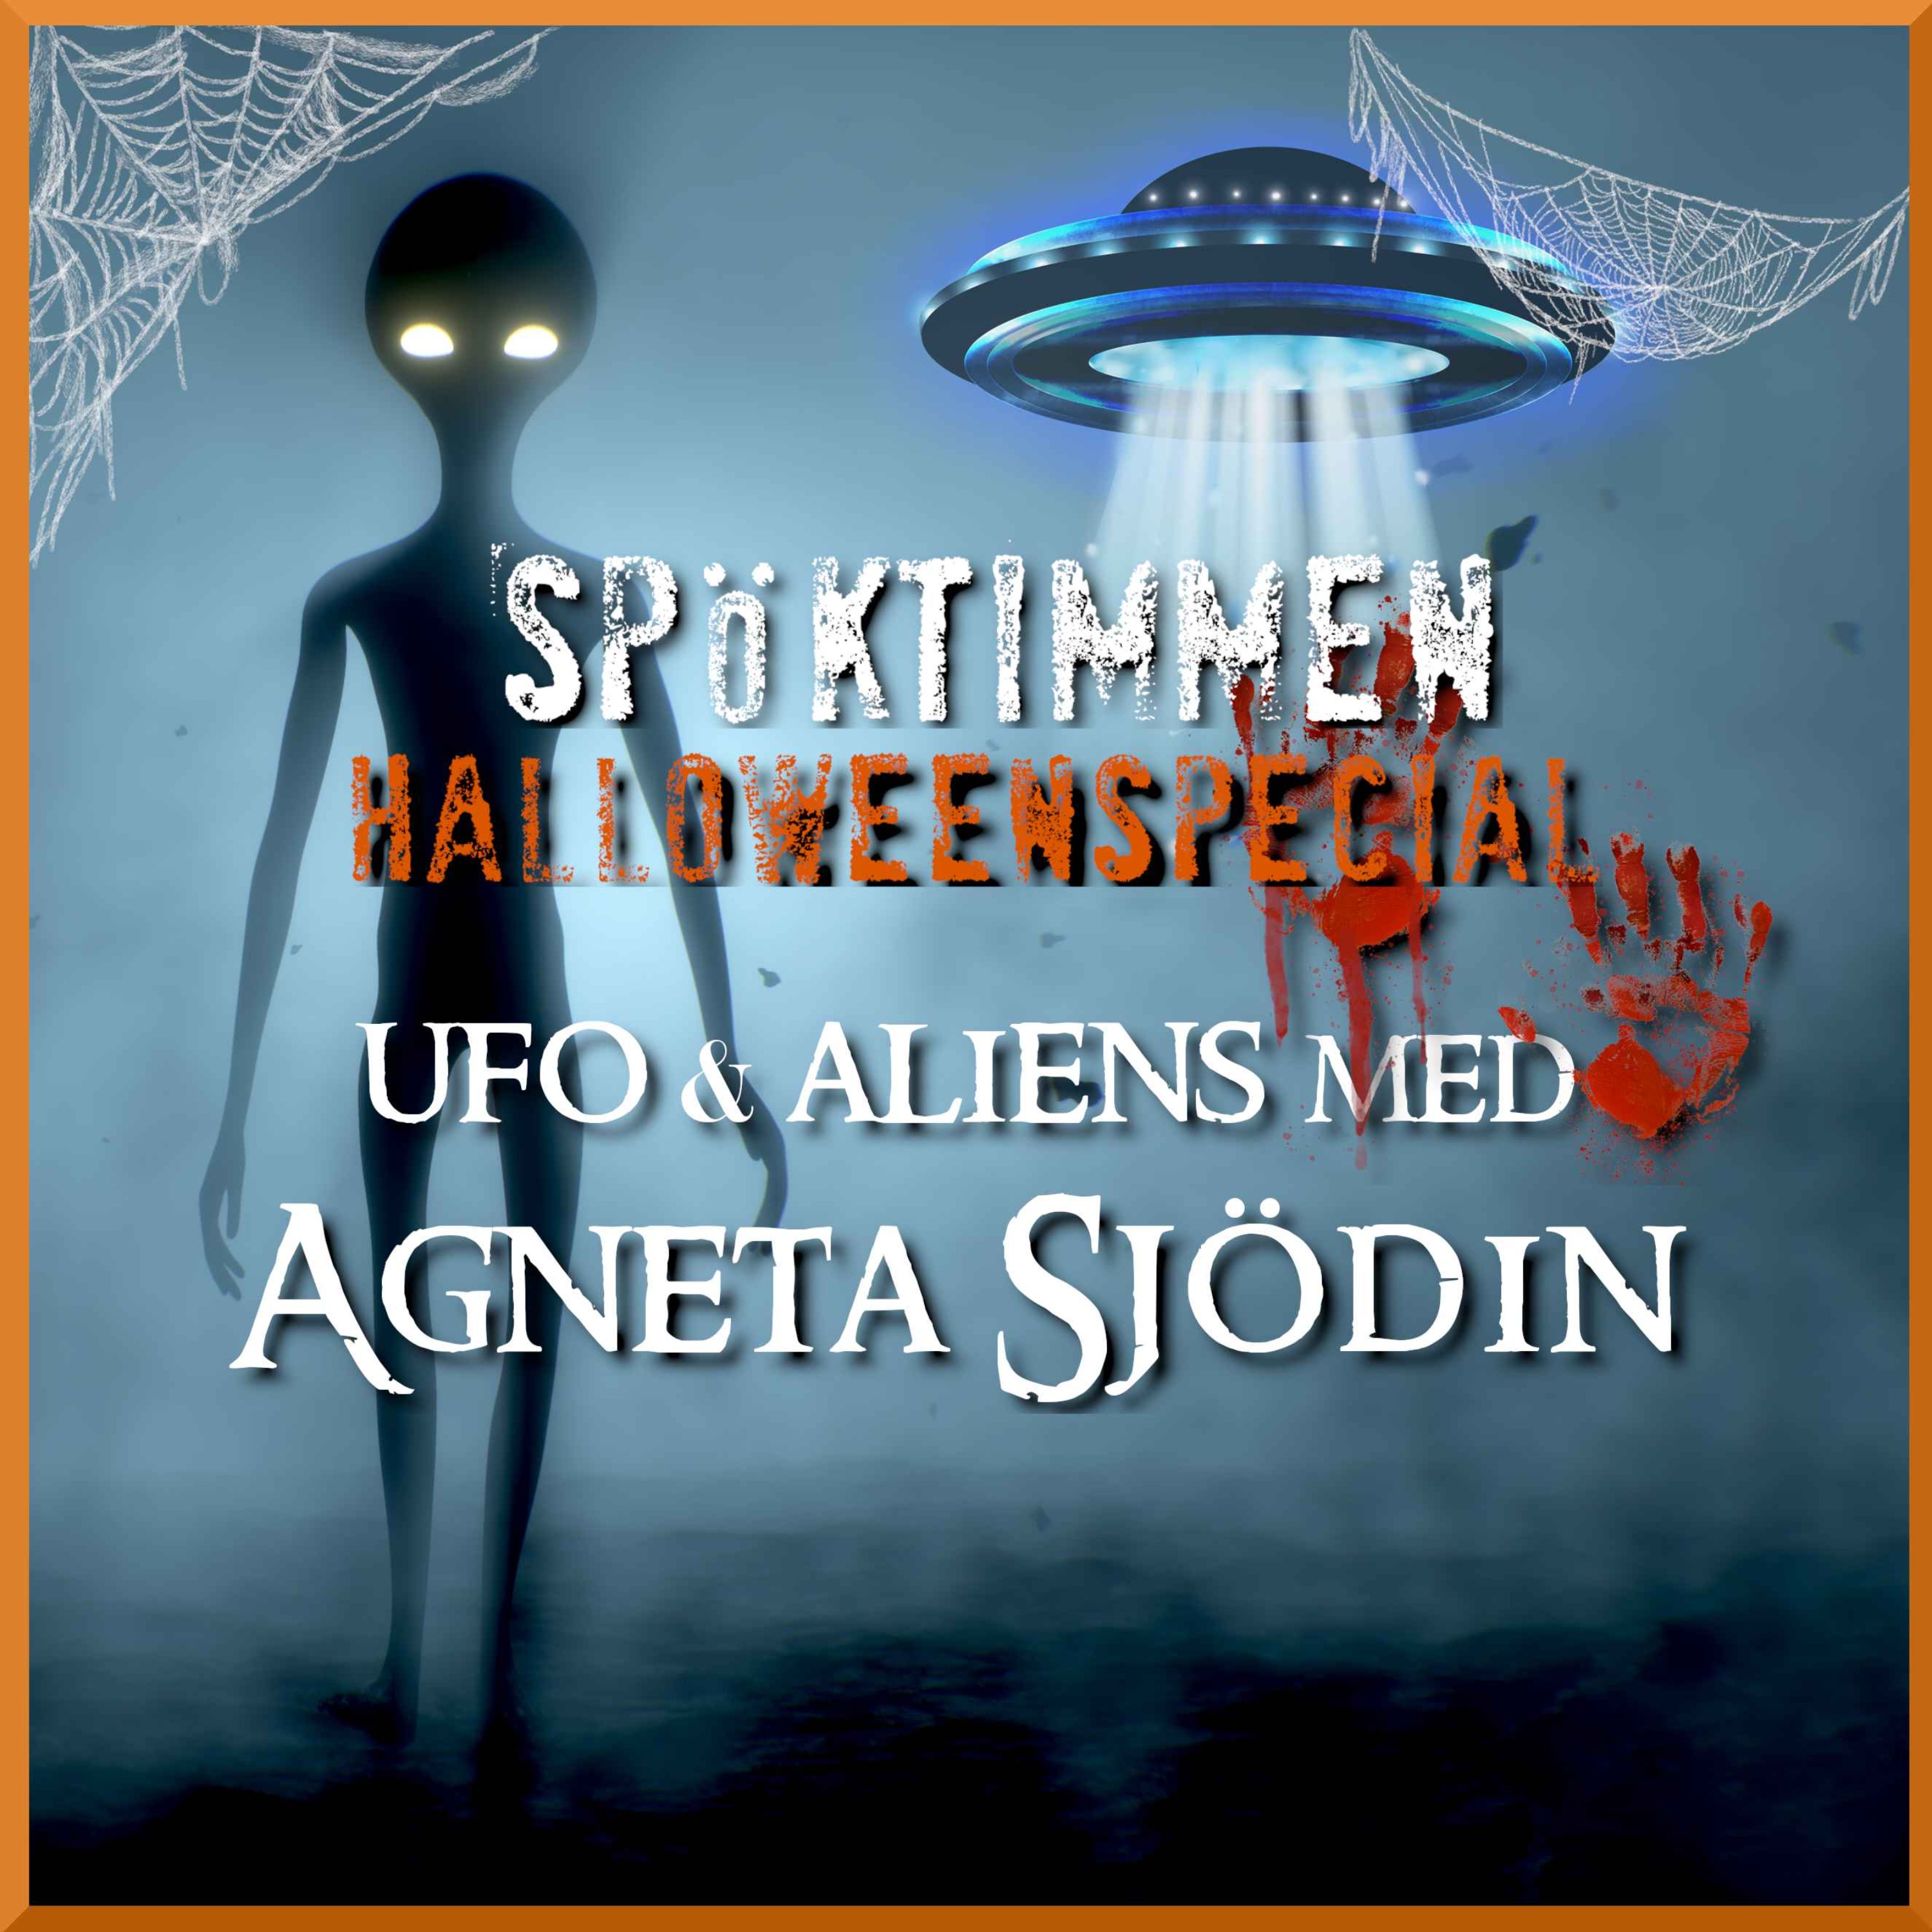 Halloween: UFO med Agneta Sjödin